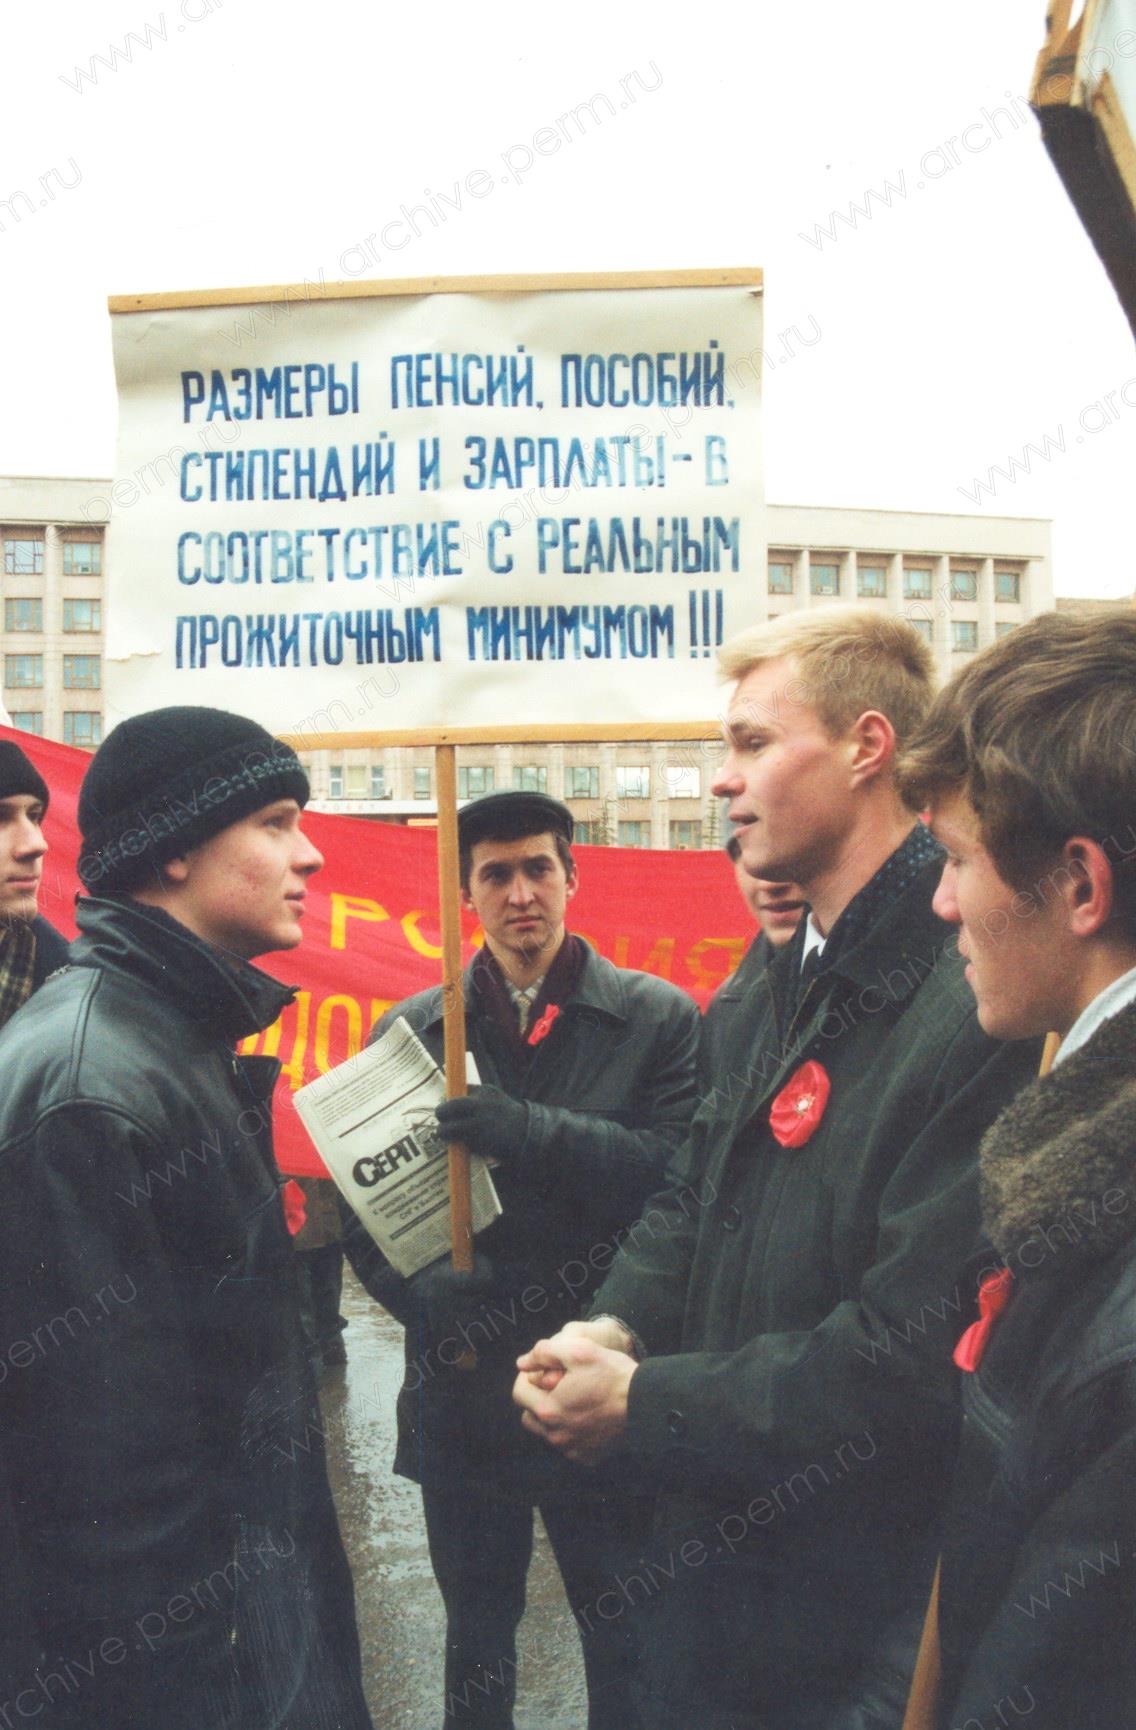 ФФ.Оп.18п.Д.3069. Студенты ПГУ на митинге. 2001. Пермь.jpg